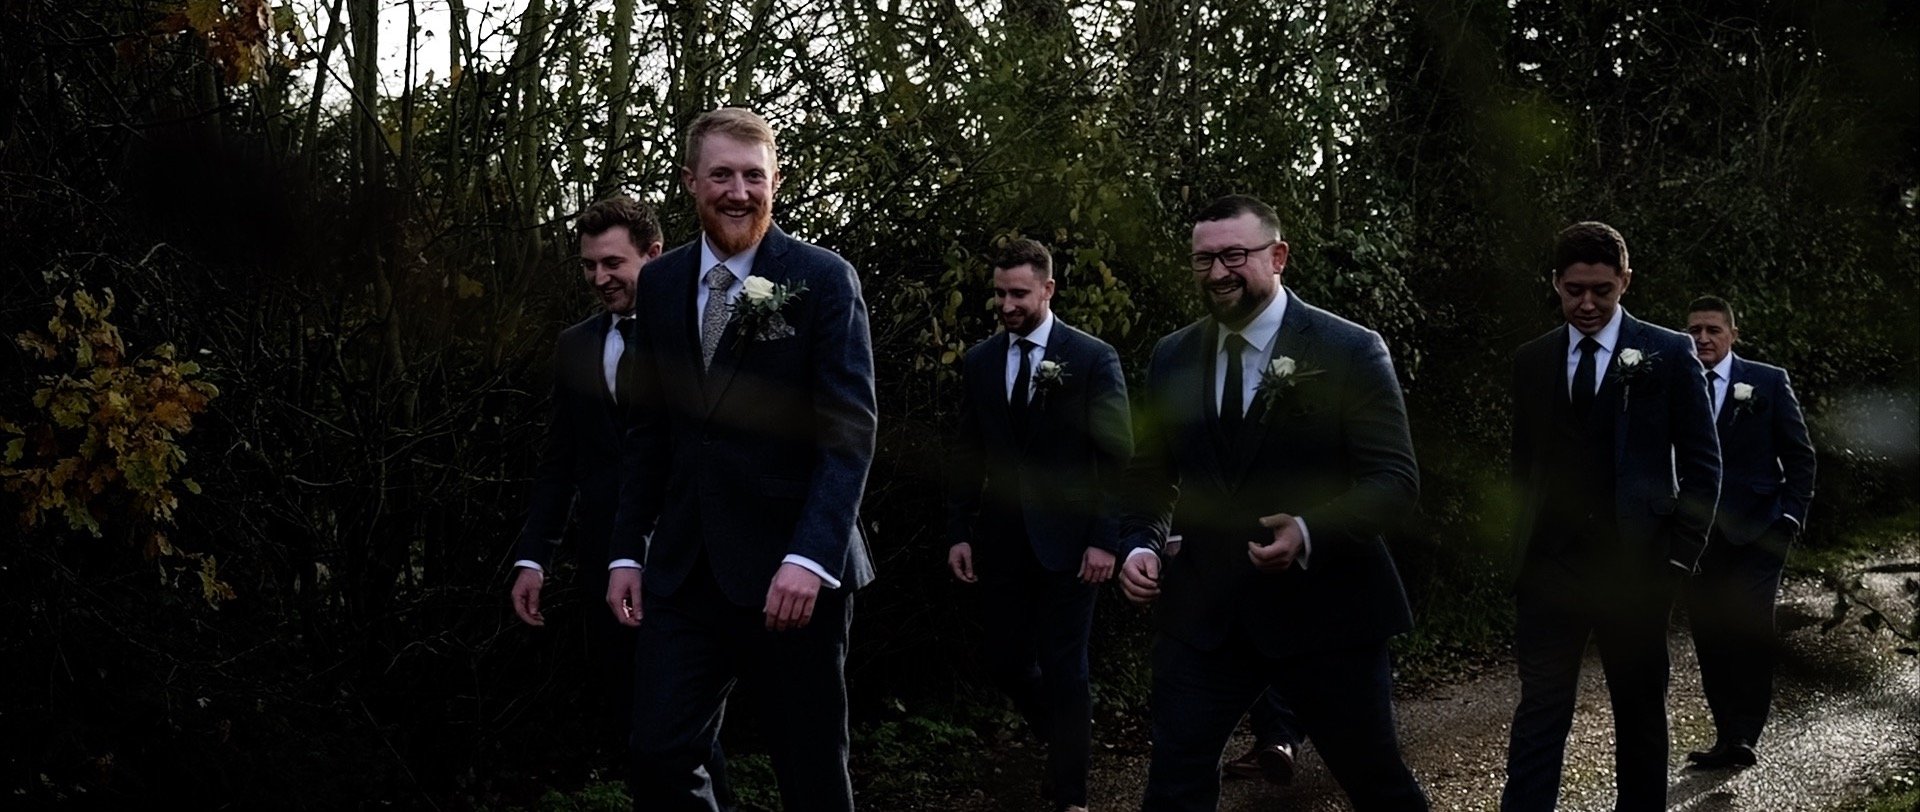 Apton Hall Wedding Videography - 3 Cheers Media - Walking groomsmen.jpg